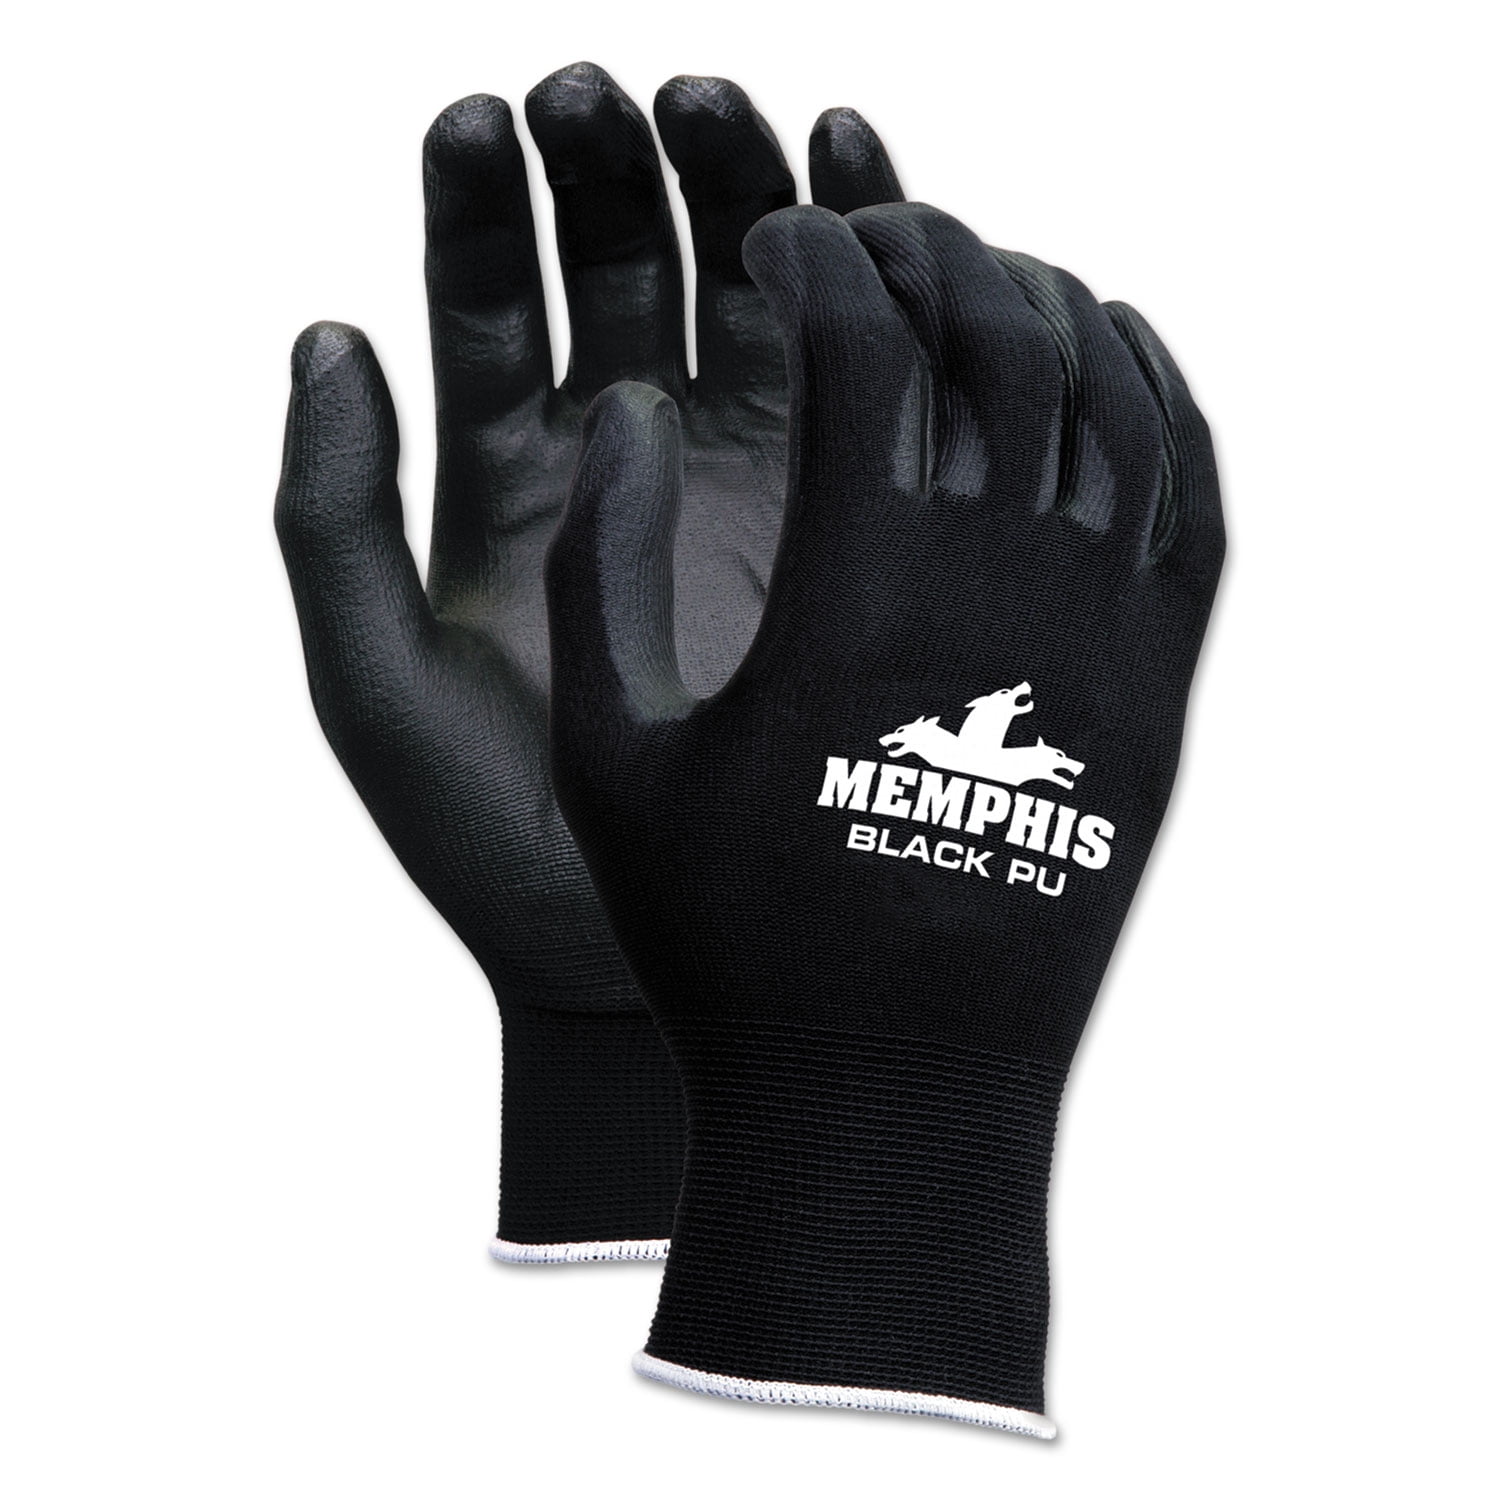 Aurelia PU Flex PLUS Black 201 Black PU Palm Coated Work Gloves SIZE LARGE 